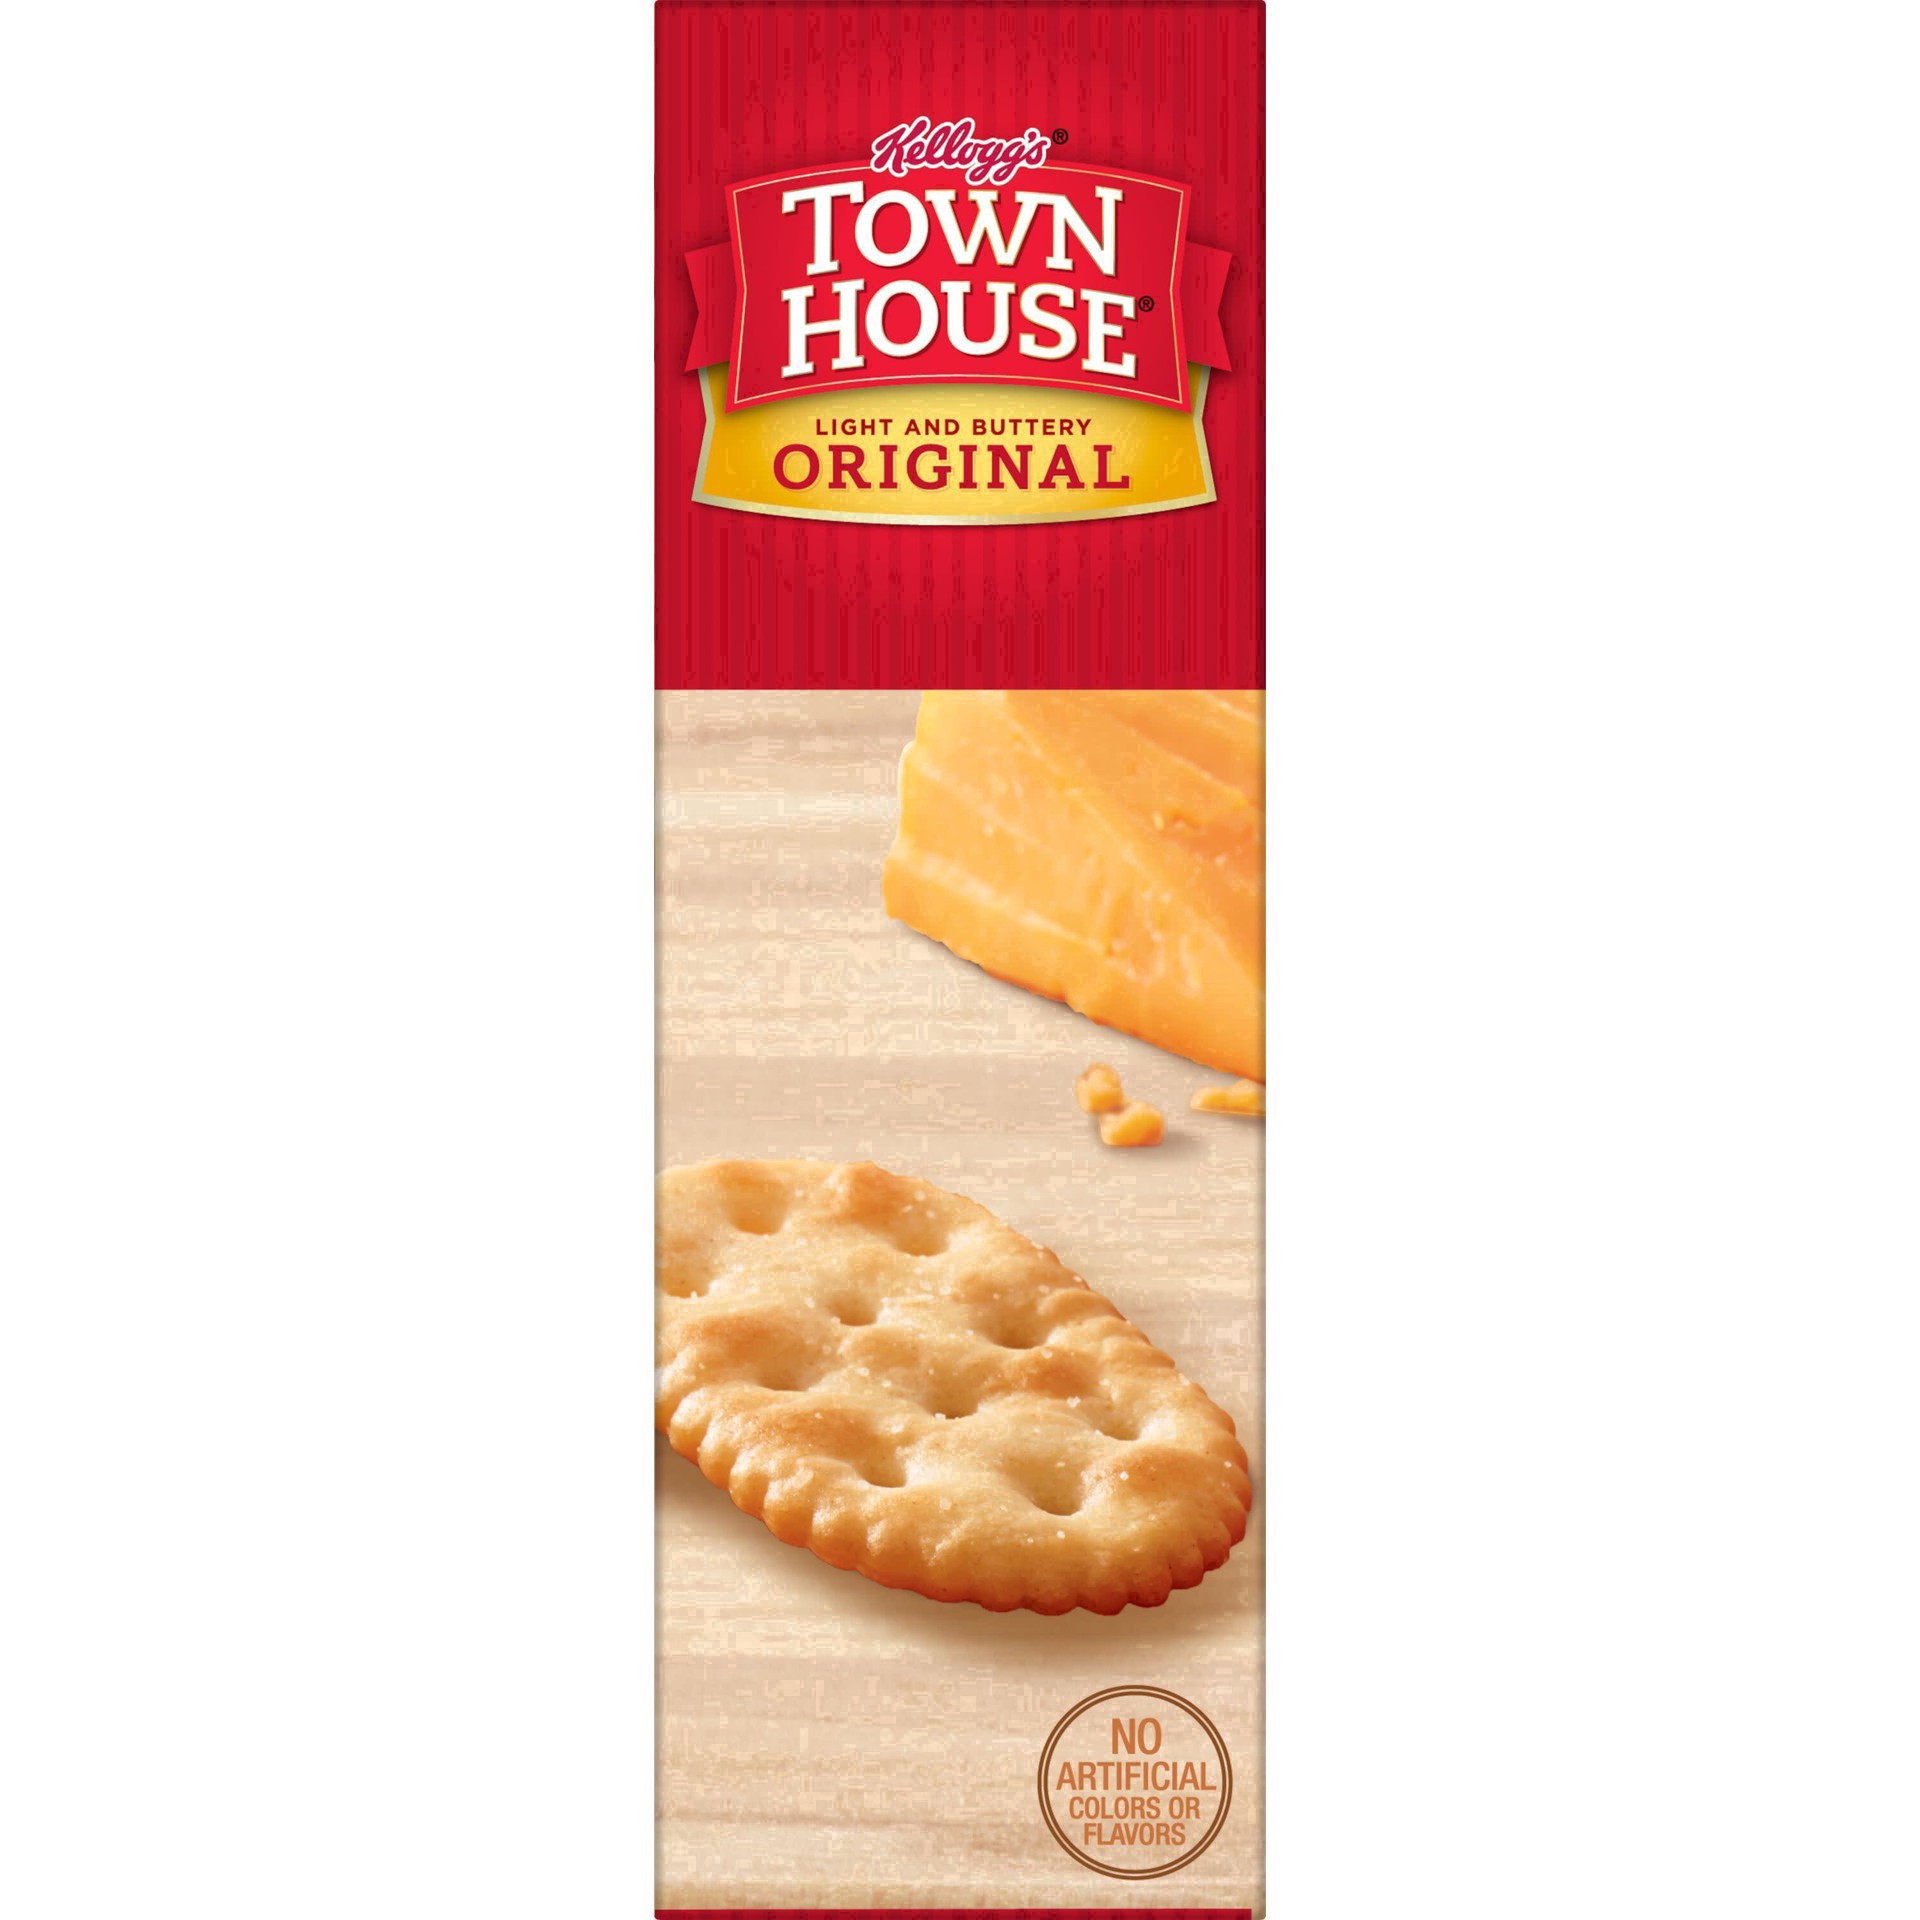 slide 48 of 101, Town House Kellogg's Town House Original Snack Crackers - 13.8oz, 13.8 oz